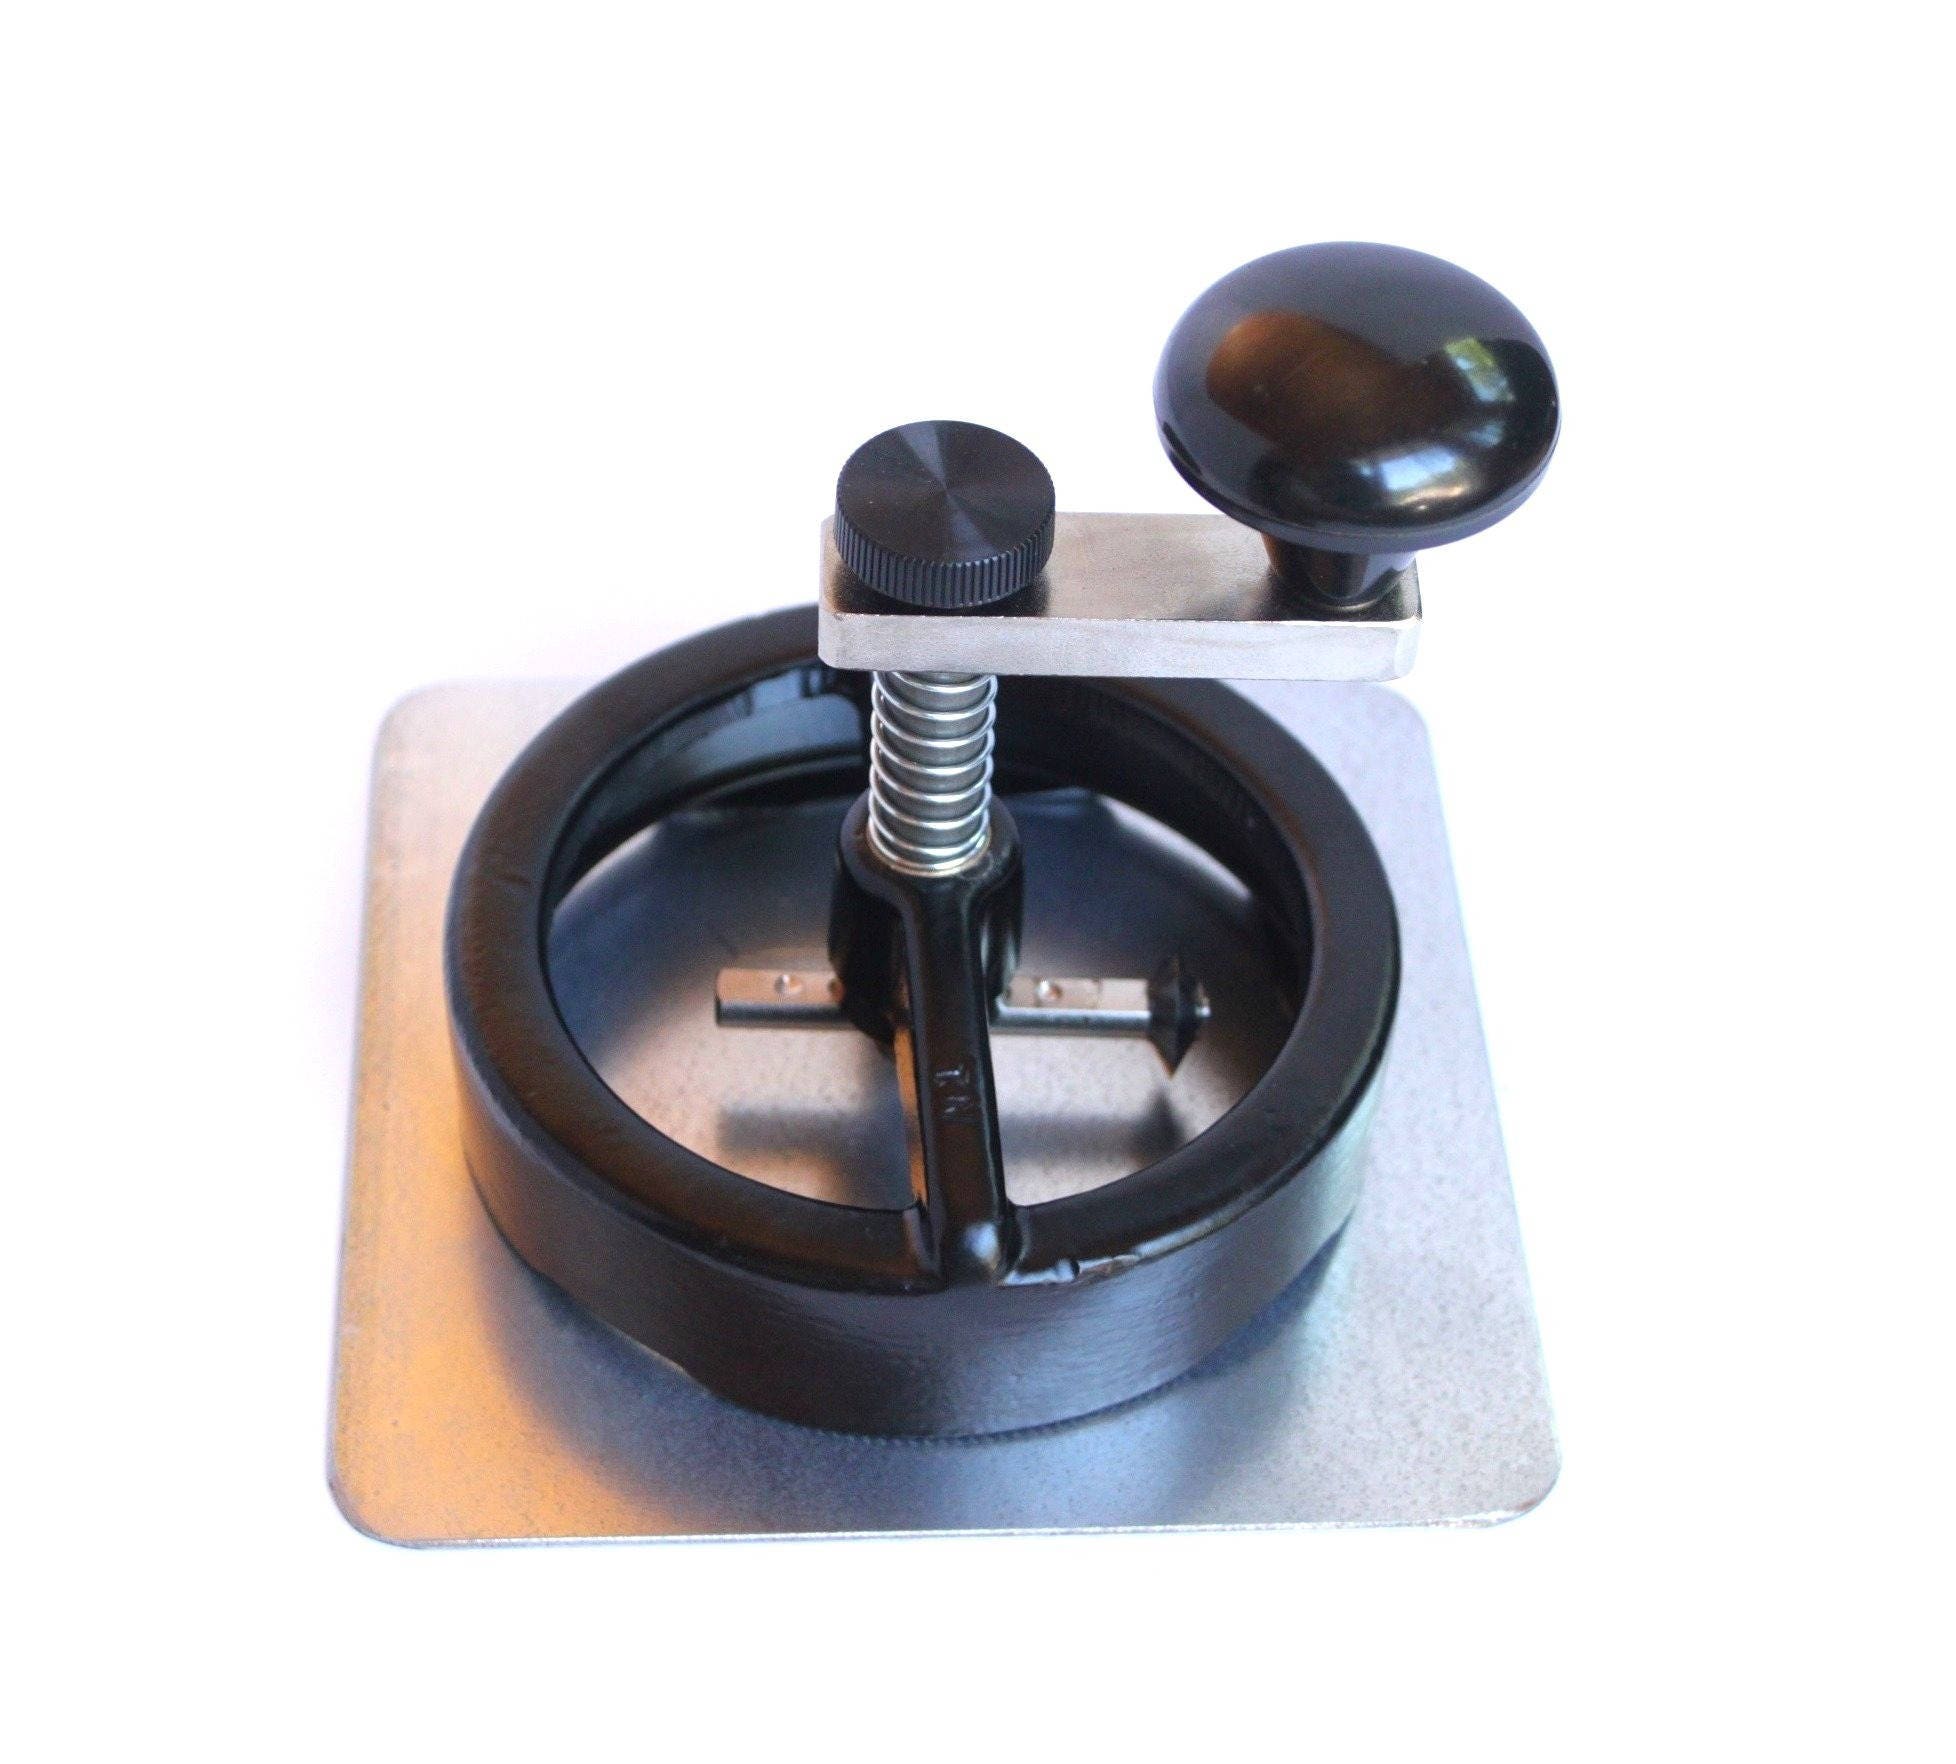 Circle Cutter Compass - Circles Photo Paper Cutter Diy Circular Tool  Tangential